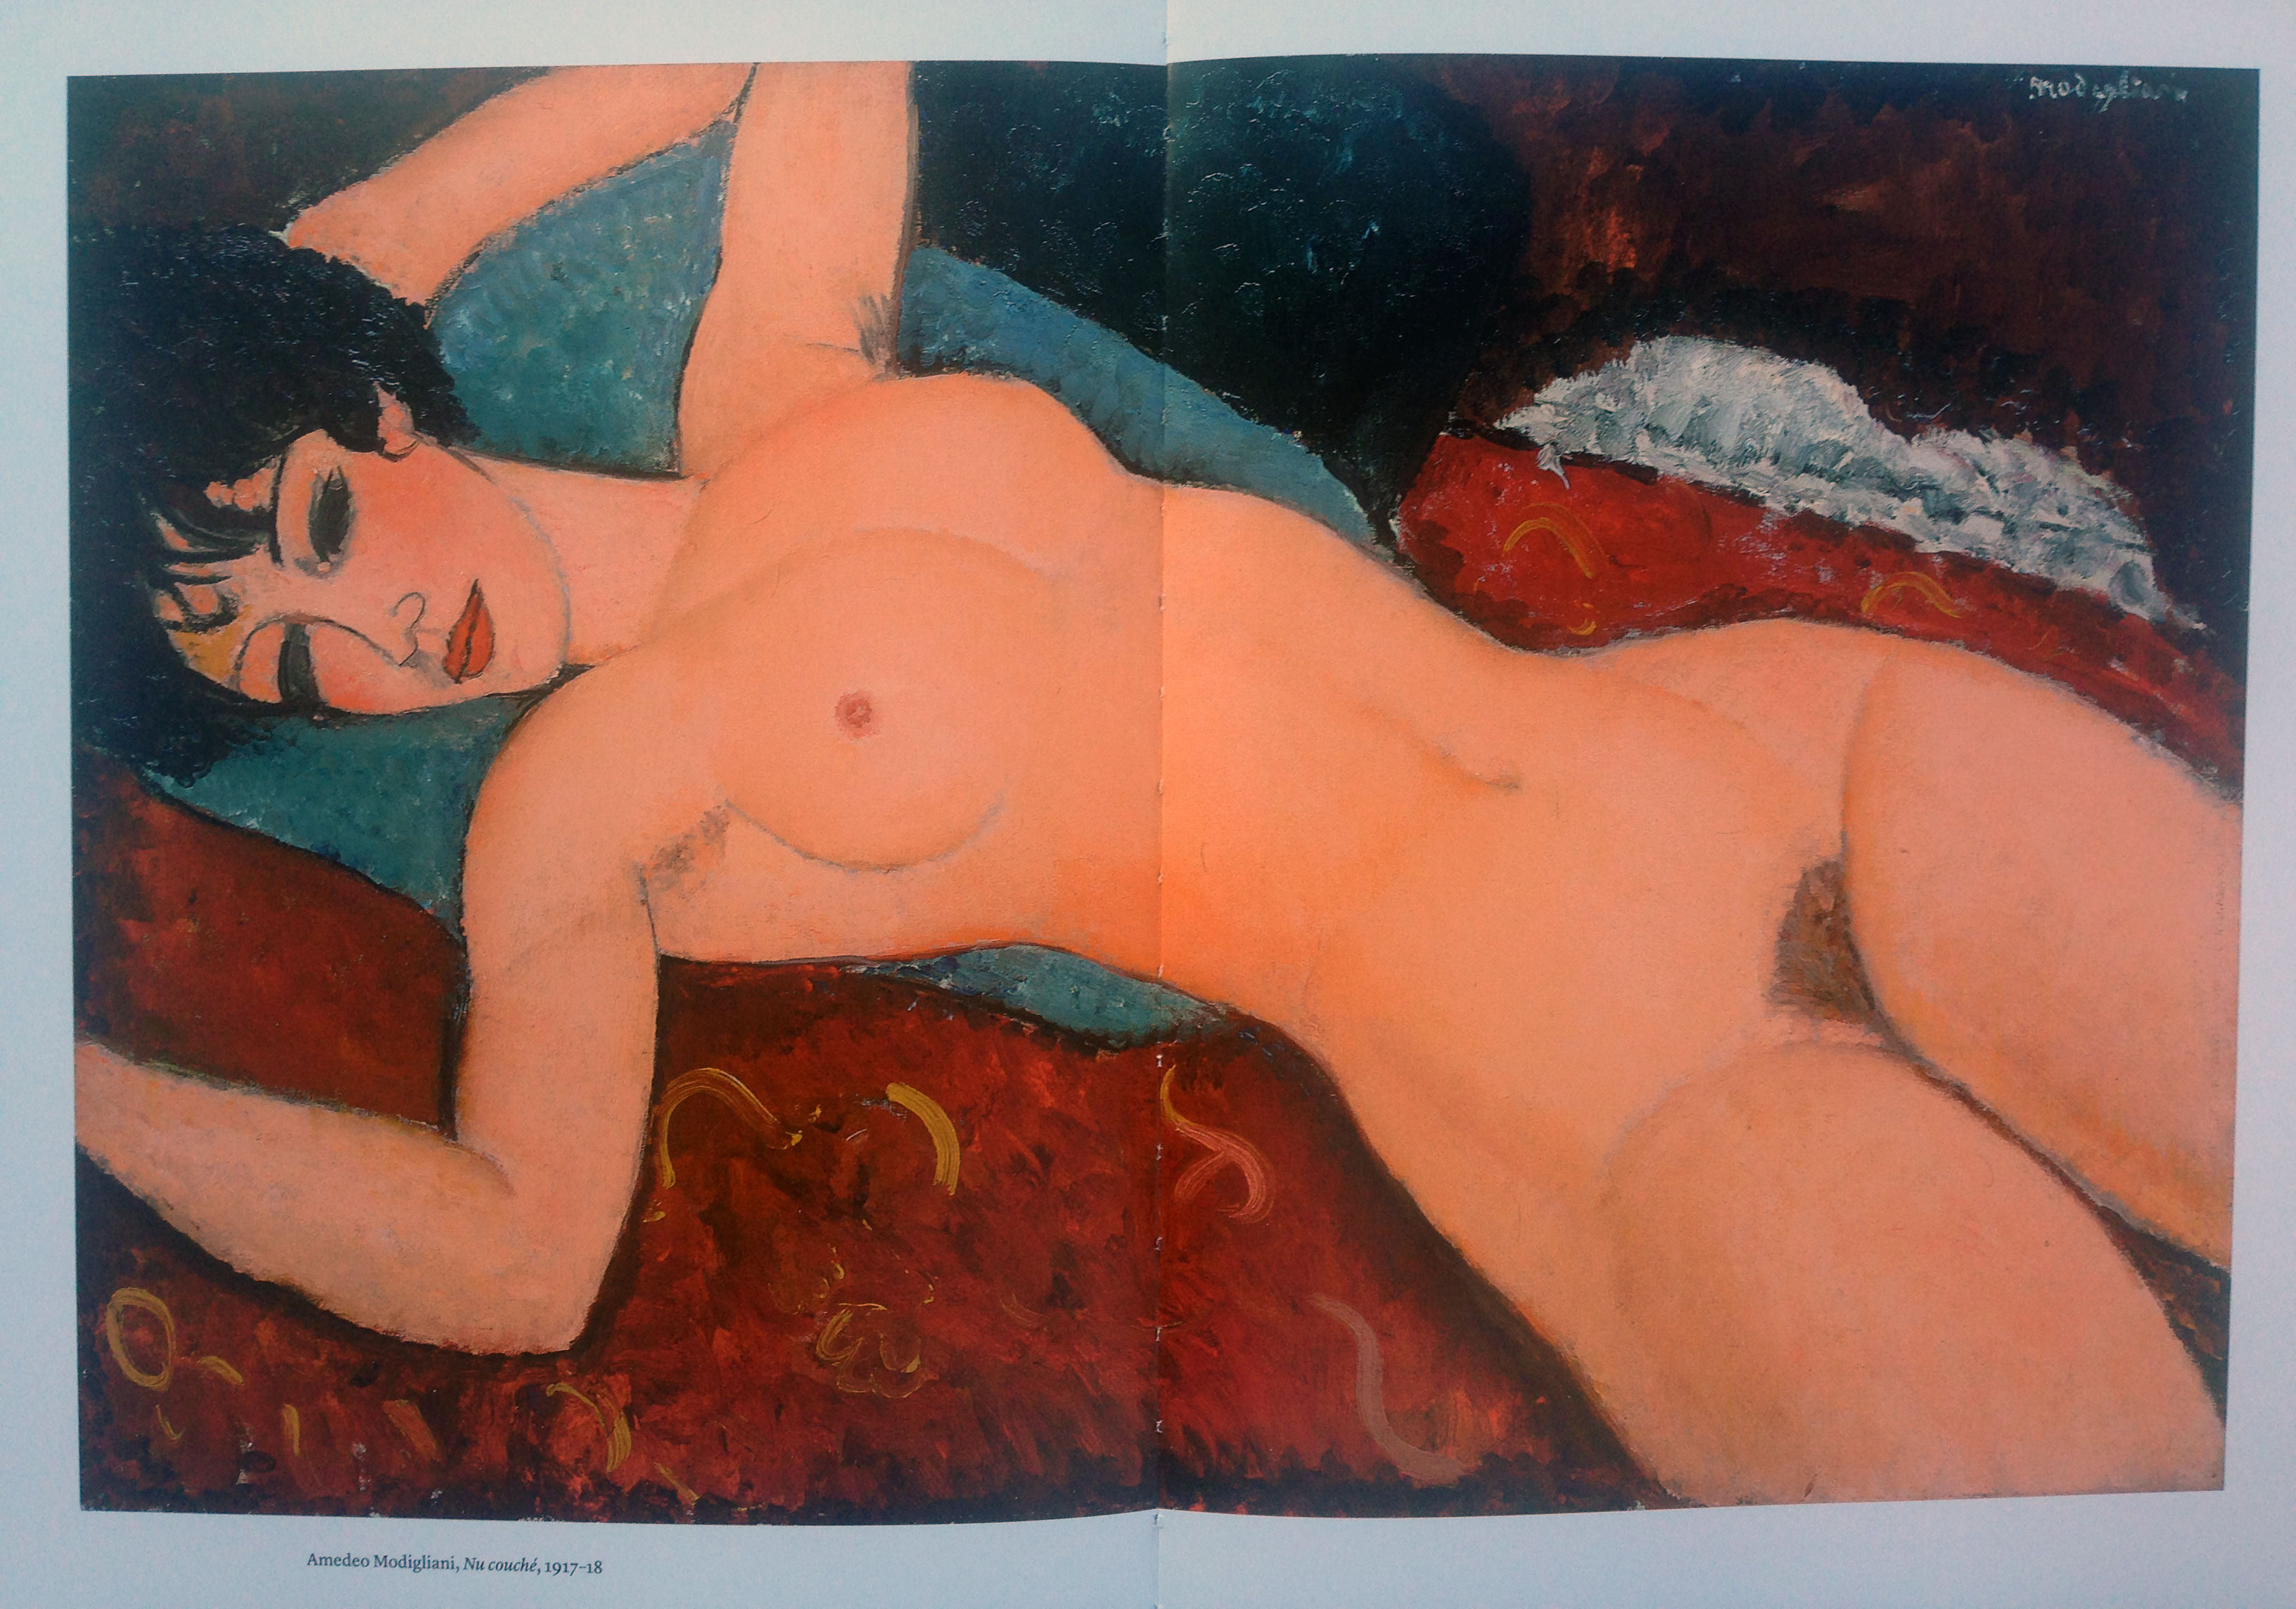 The sad story behind Modigliani's portrayal of lust